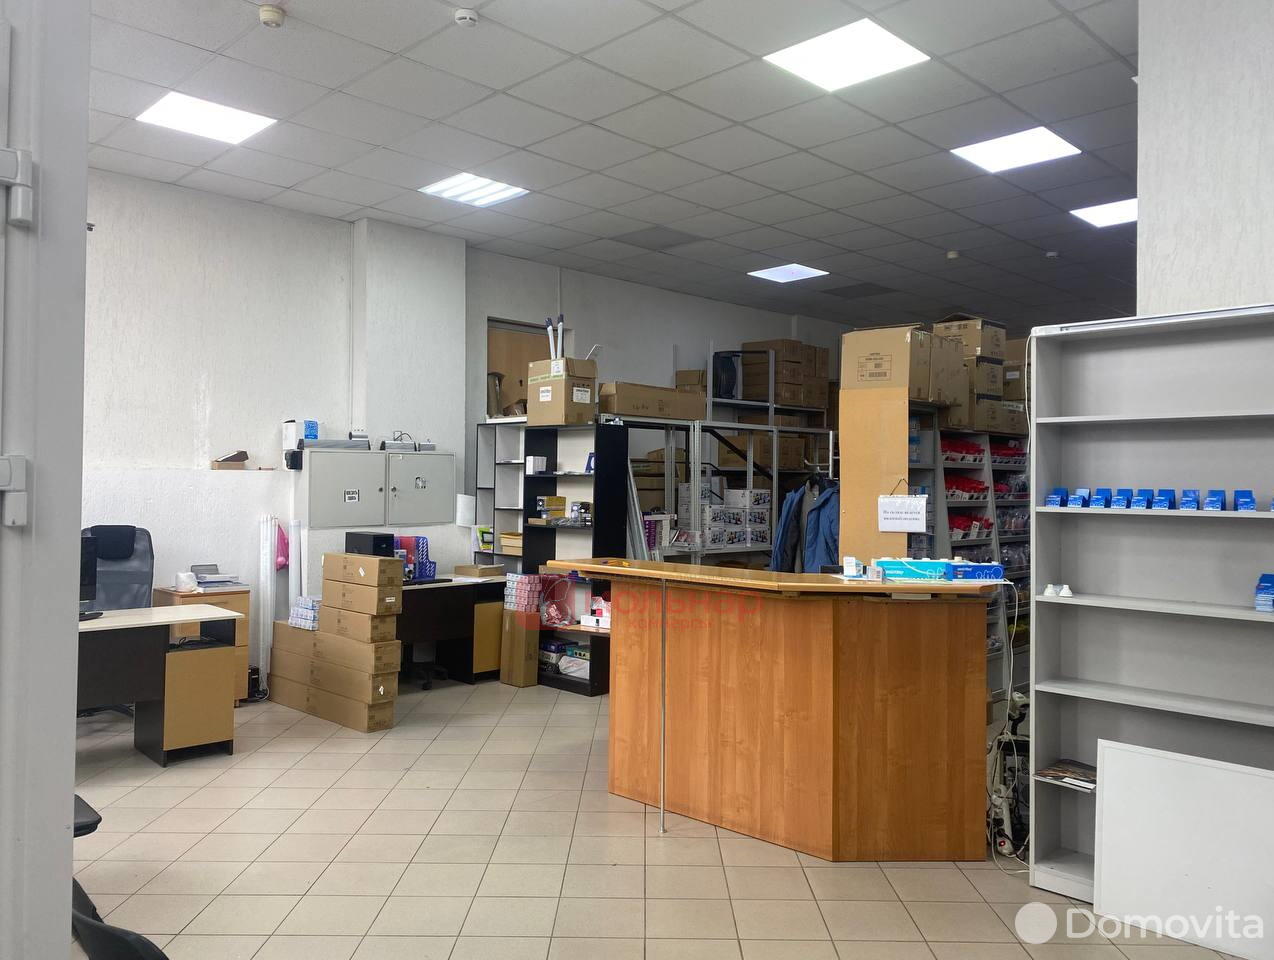 Купить складское помещение на ул. Тимирязева, д. 65А в Минске - фото 2